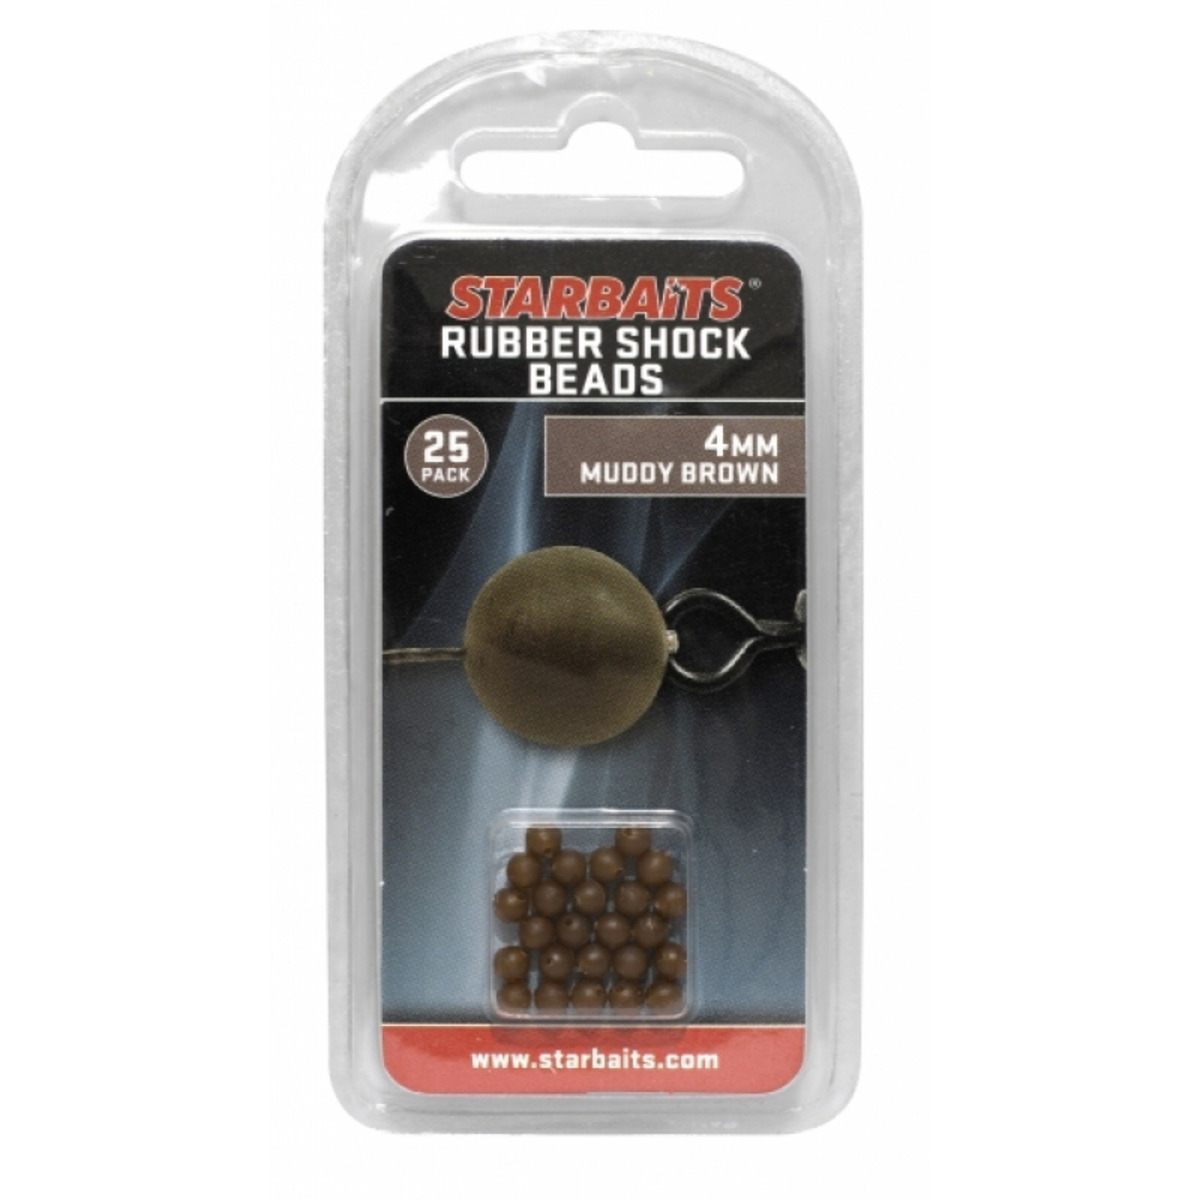 Starbaits Rubber Schock Beads 4mm - MUDDY BROWN